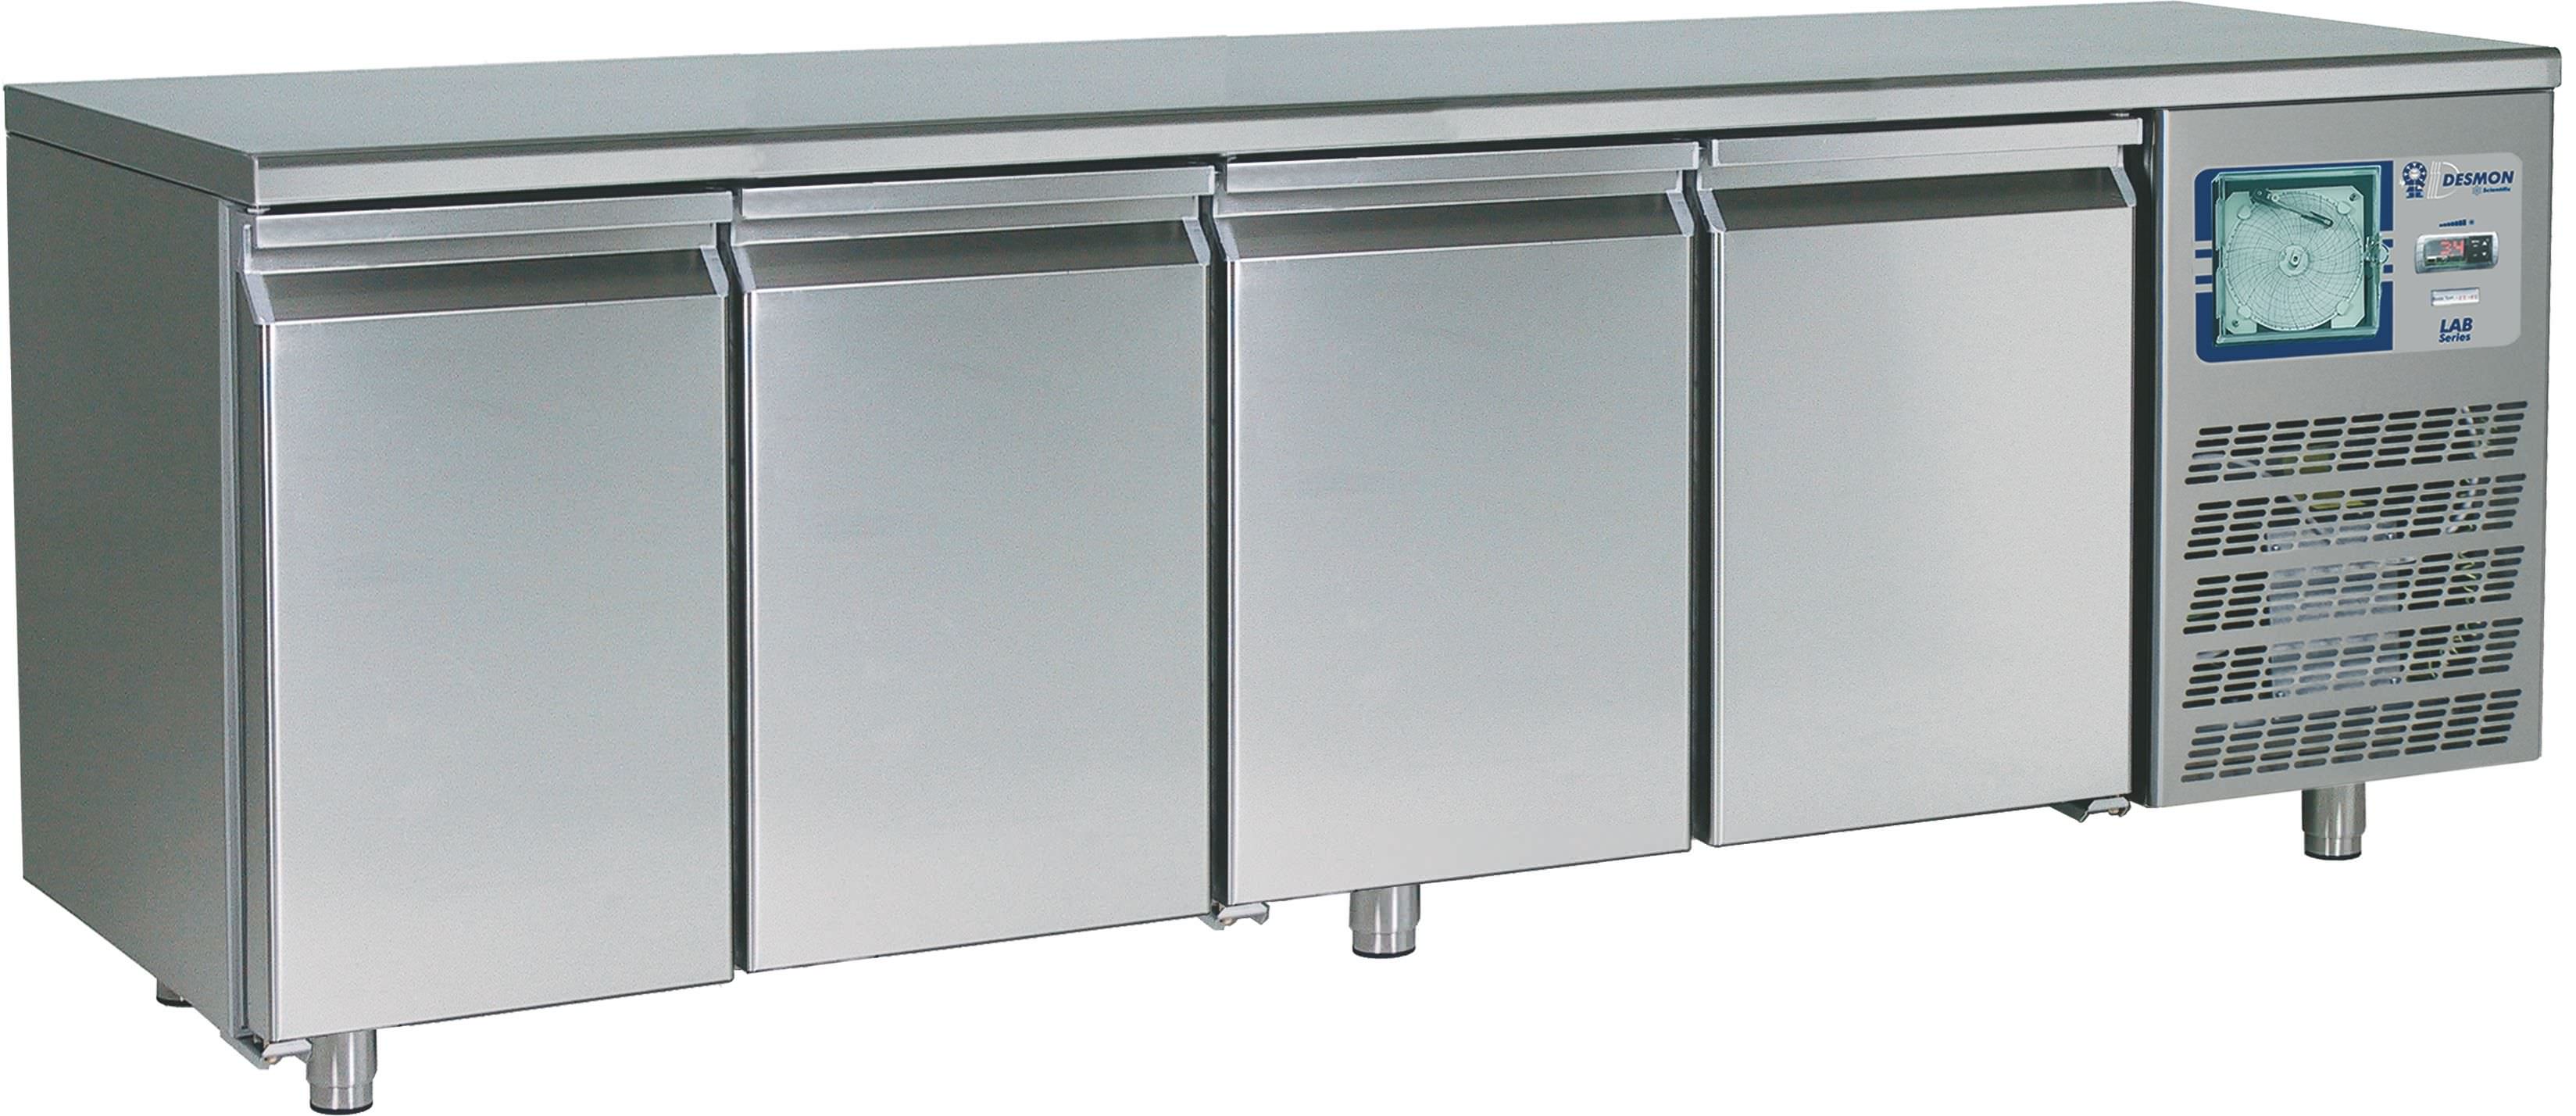 Laboratory refrigerator / built-in / 4-door 602 L | DS-TGM Desmon Spa